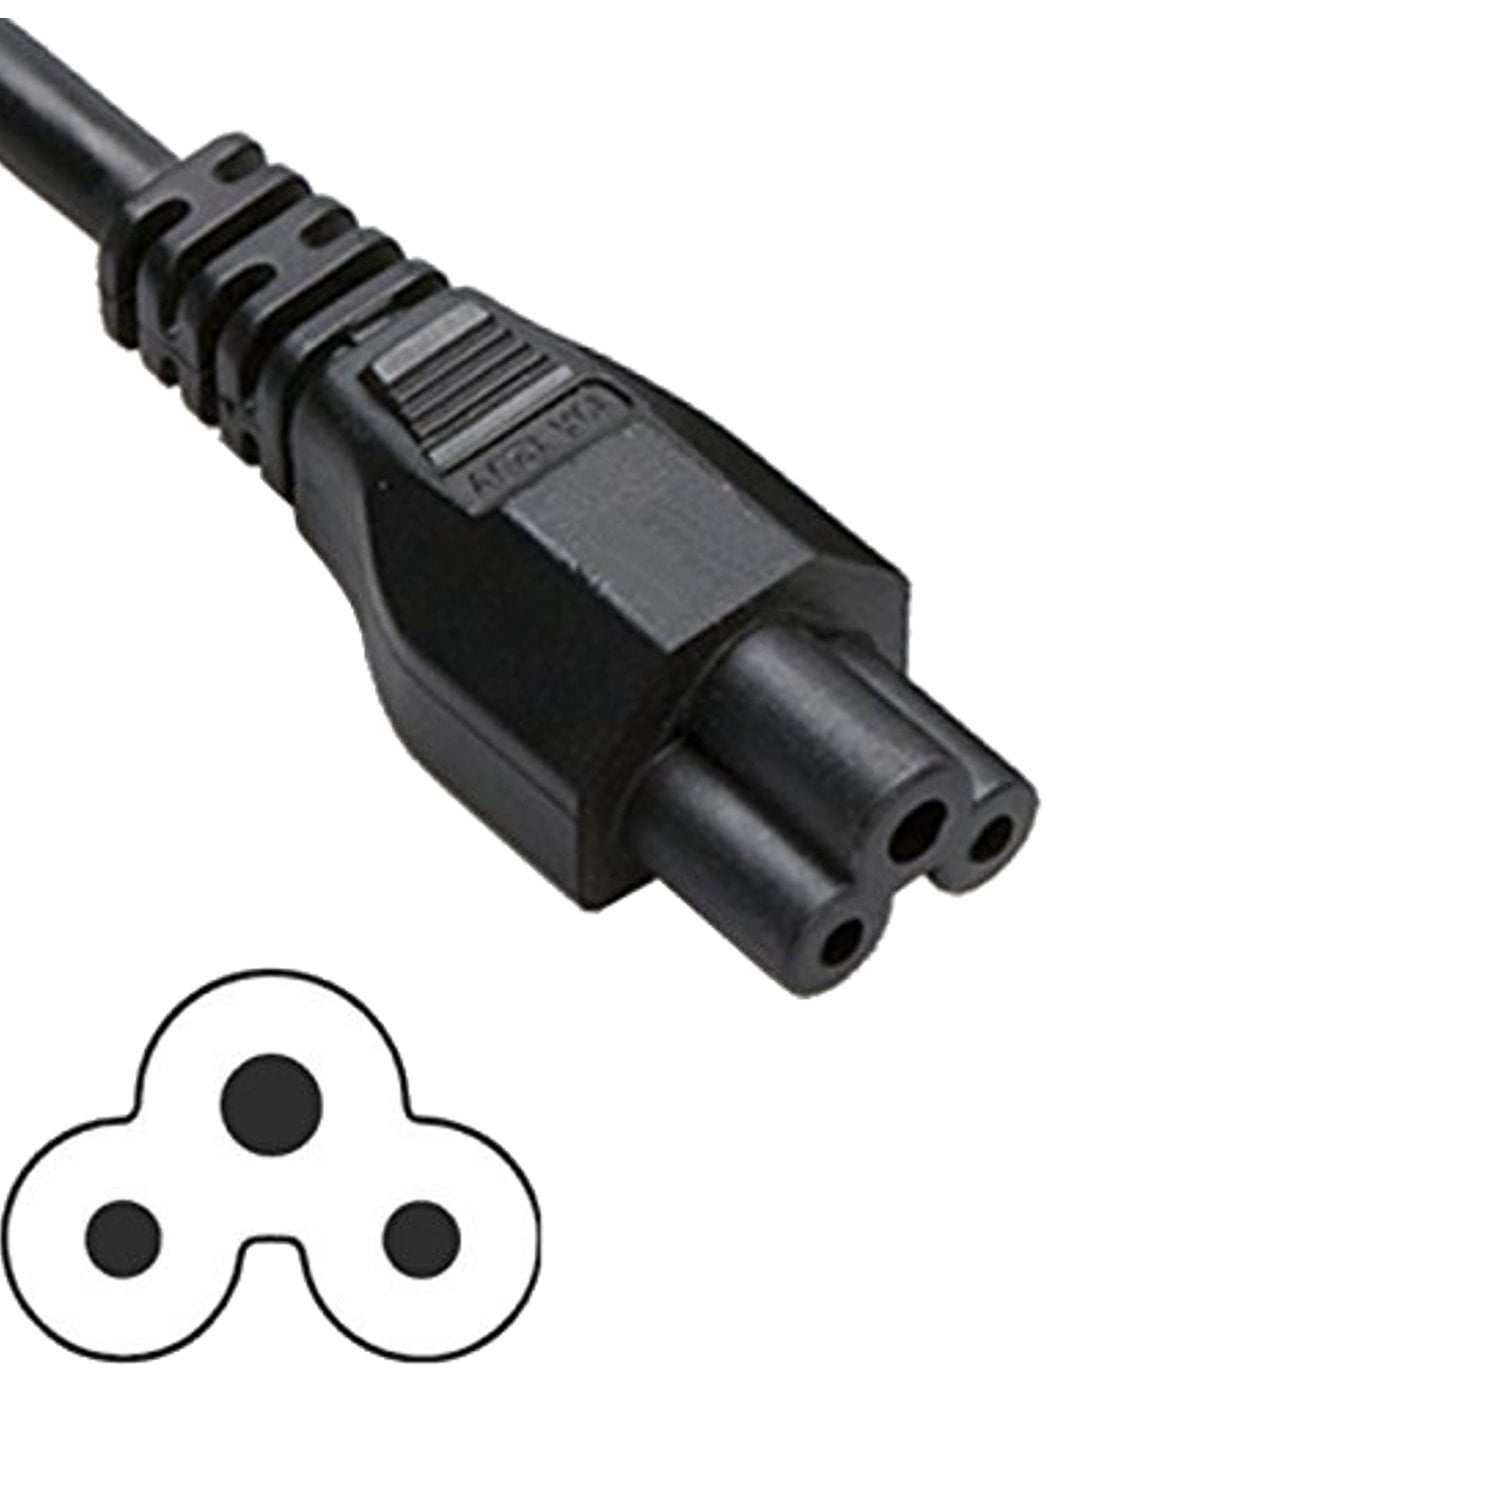 SoDo Tek TM 6 FT 3 Prong AC Power Cord Cable Plug for LG 37CS560 TV